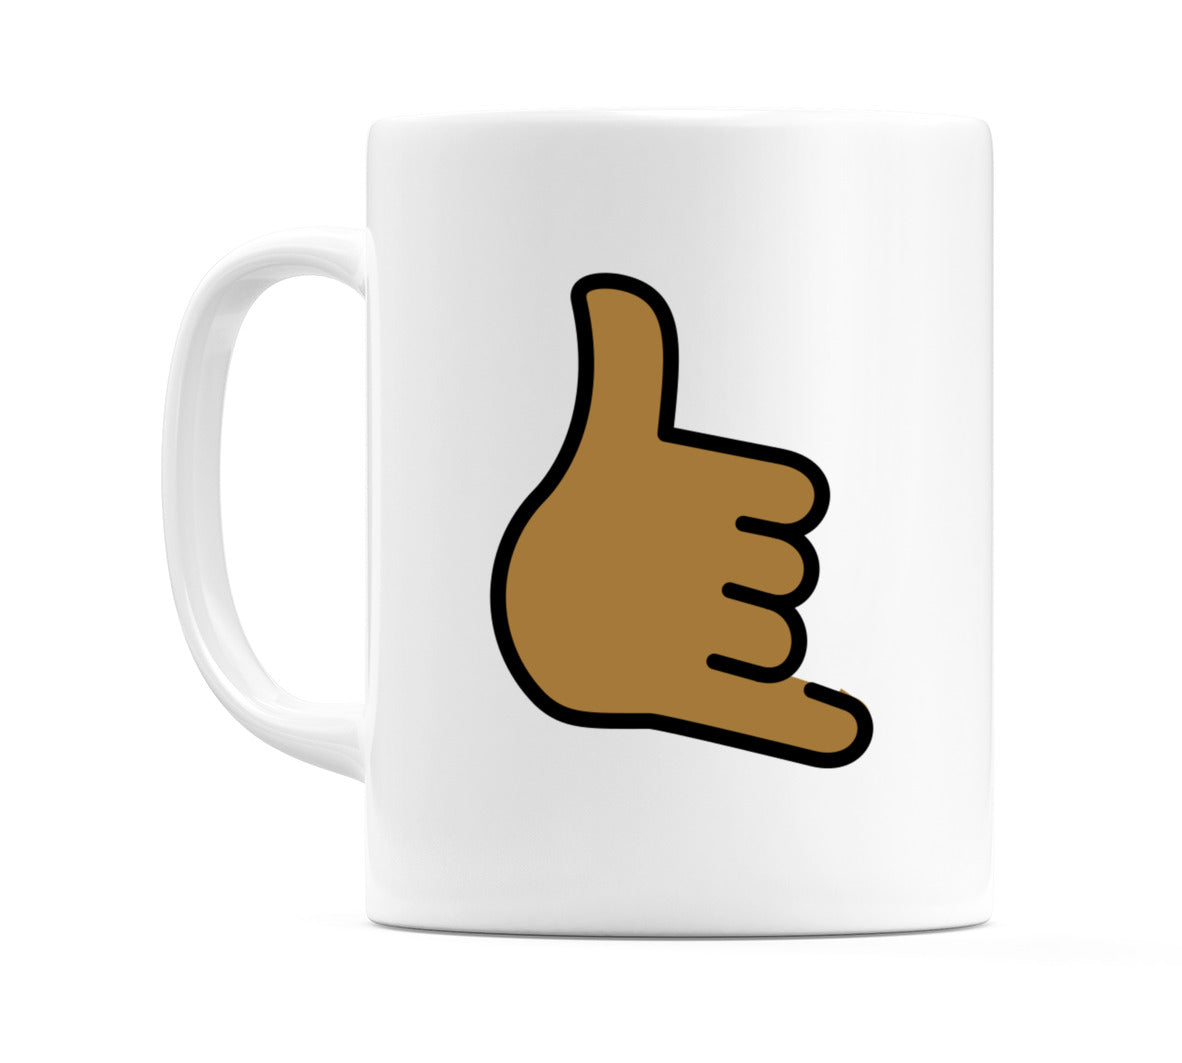 Call Me Hand: Medium-Dark Skin Tone Emoji Mug